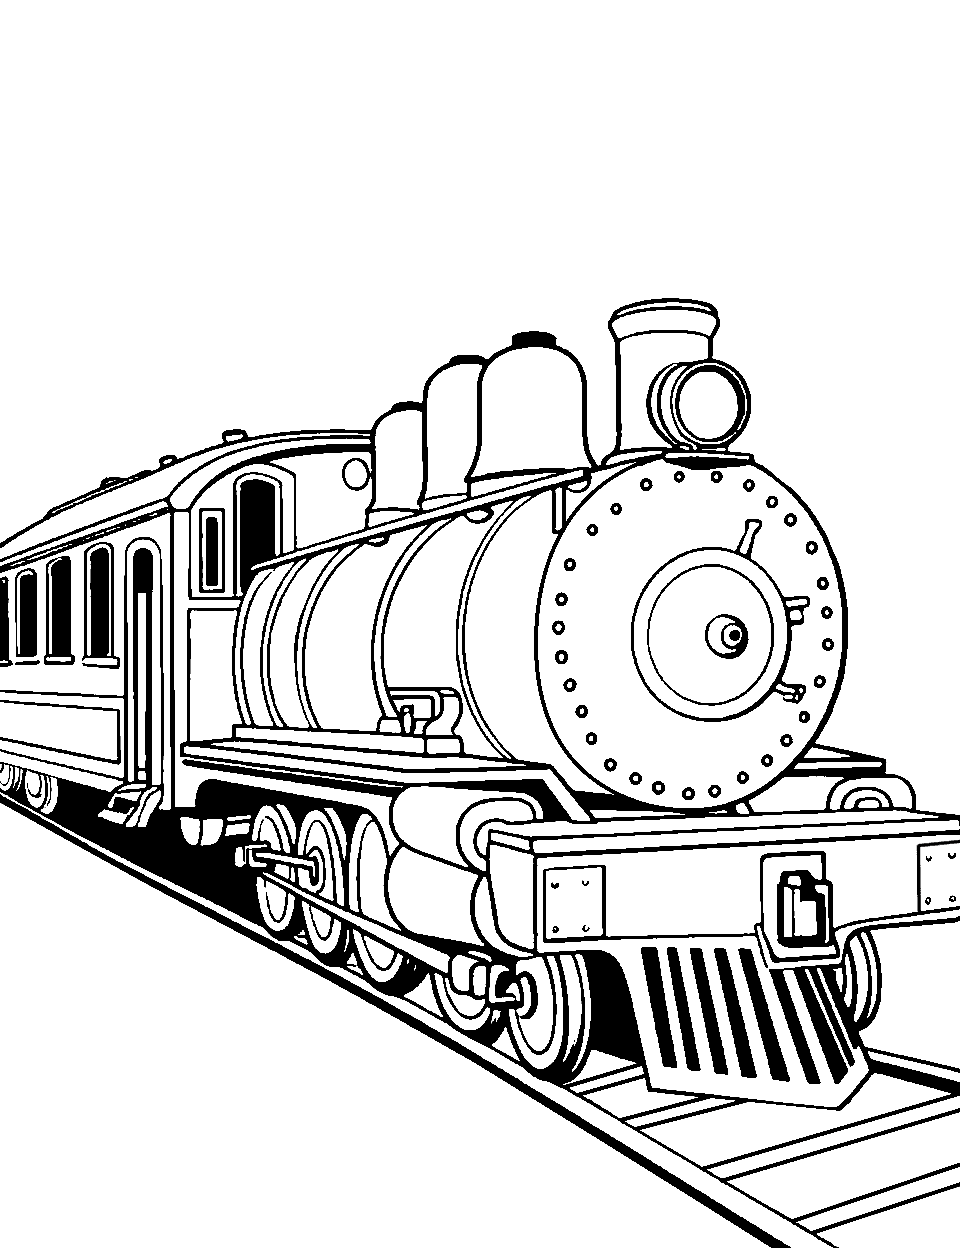 Diesel Engine in Action Train Coloring Page - A sleek diesel train engine speeding along.